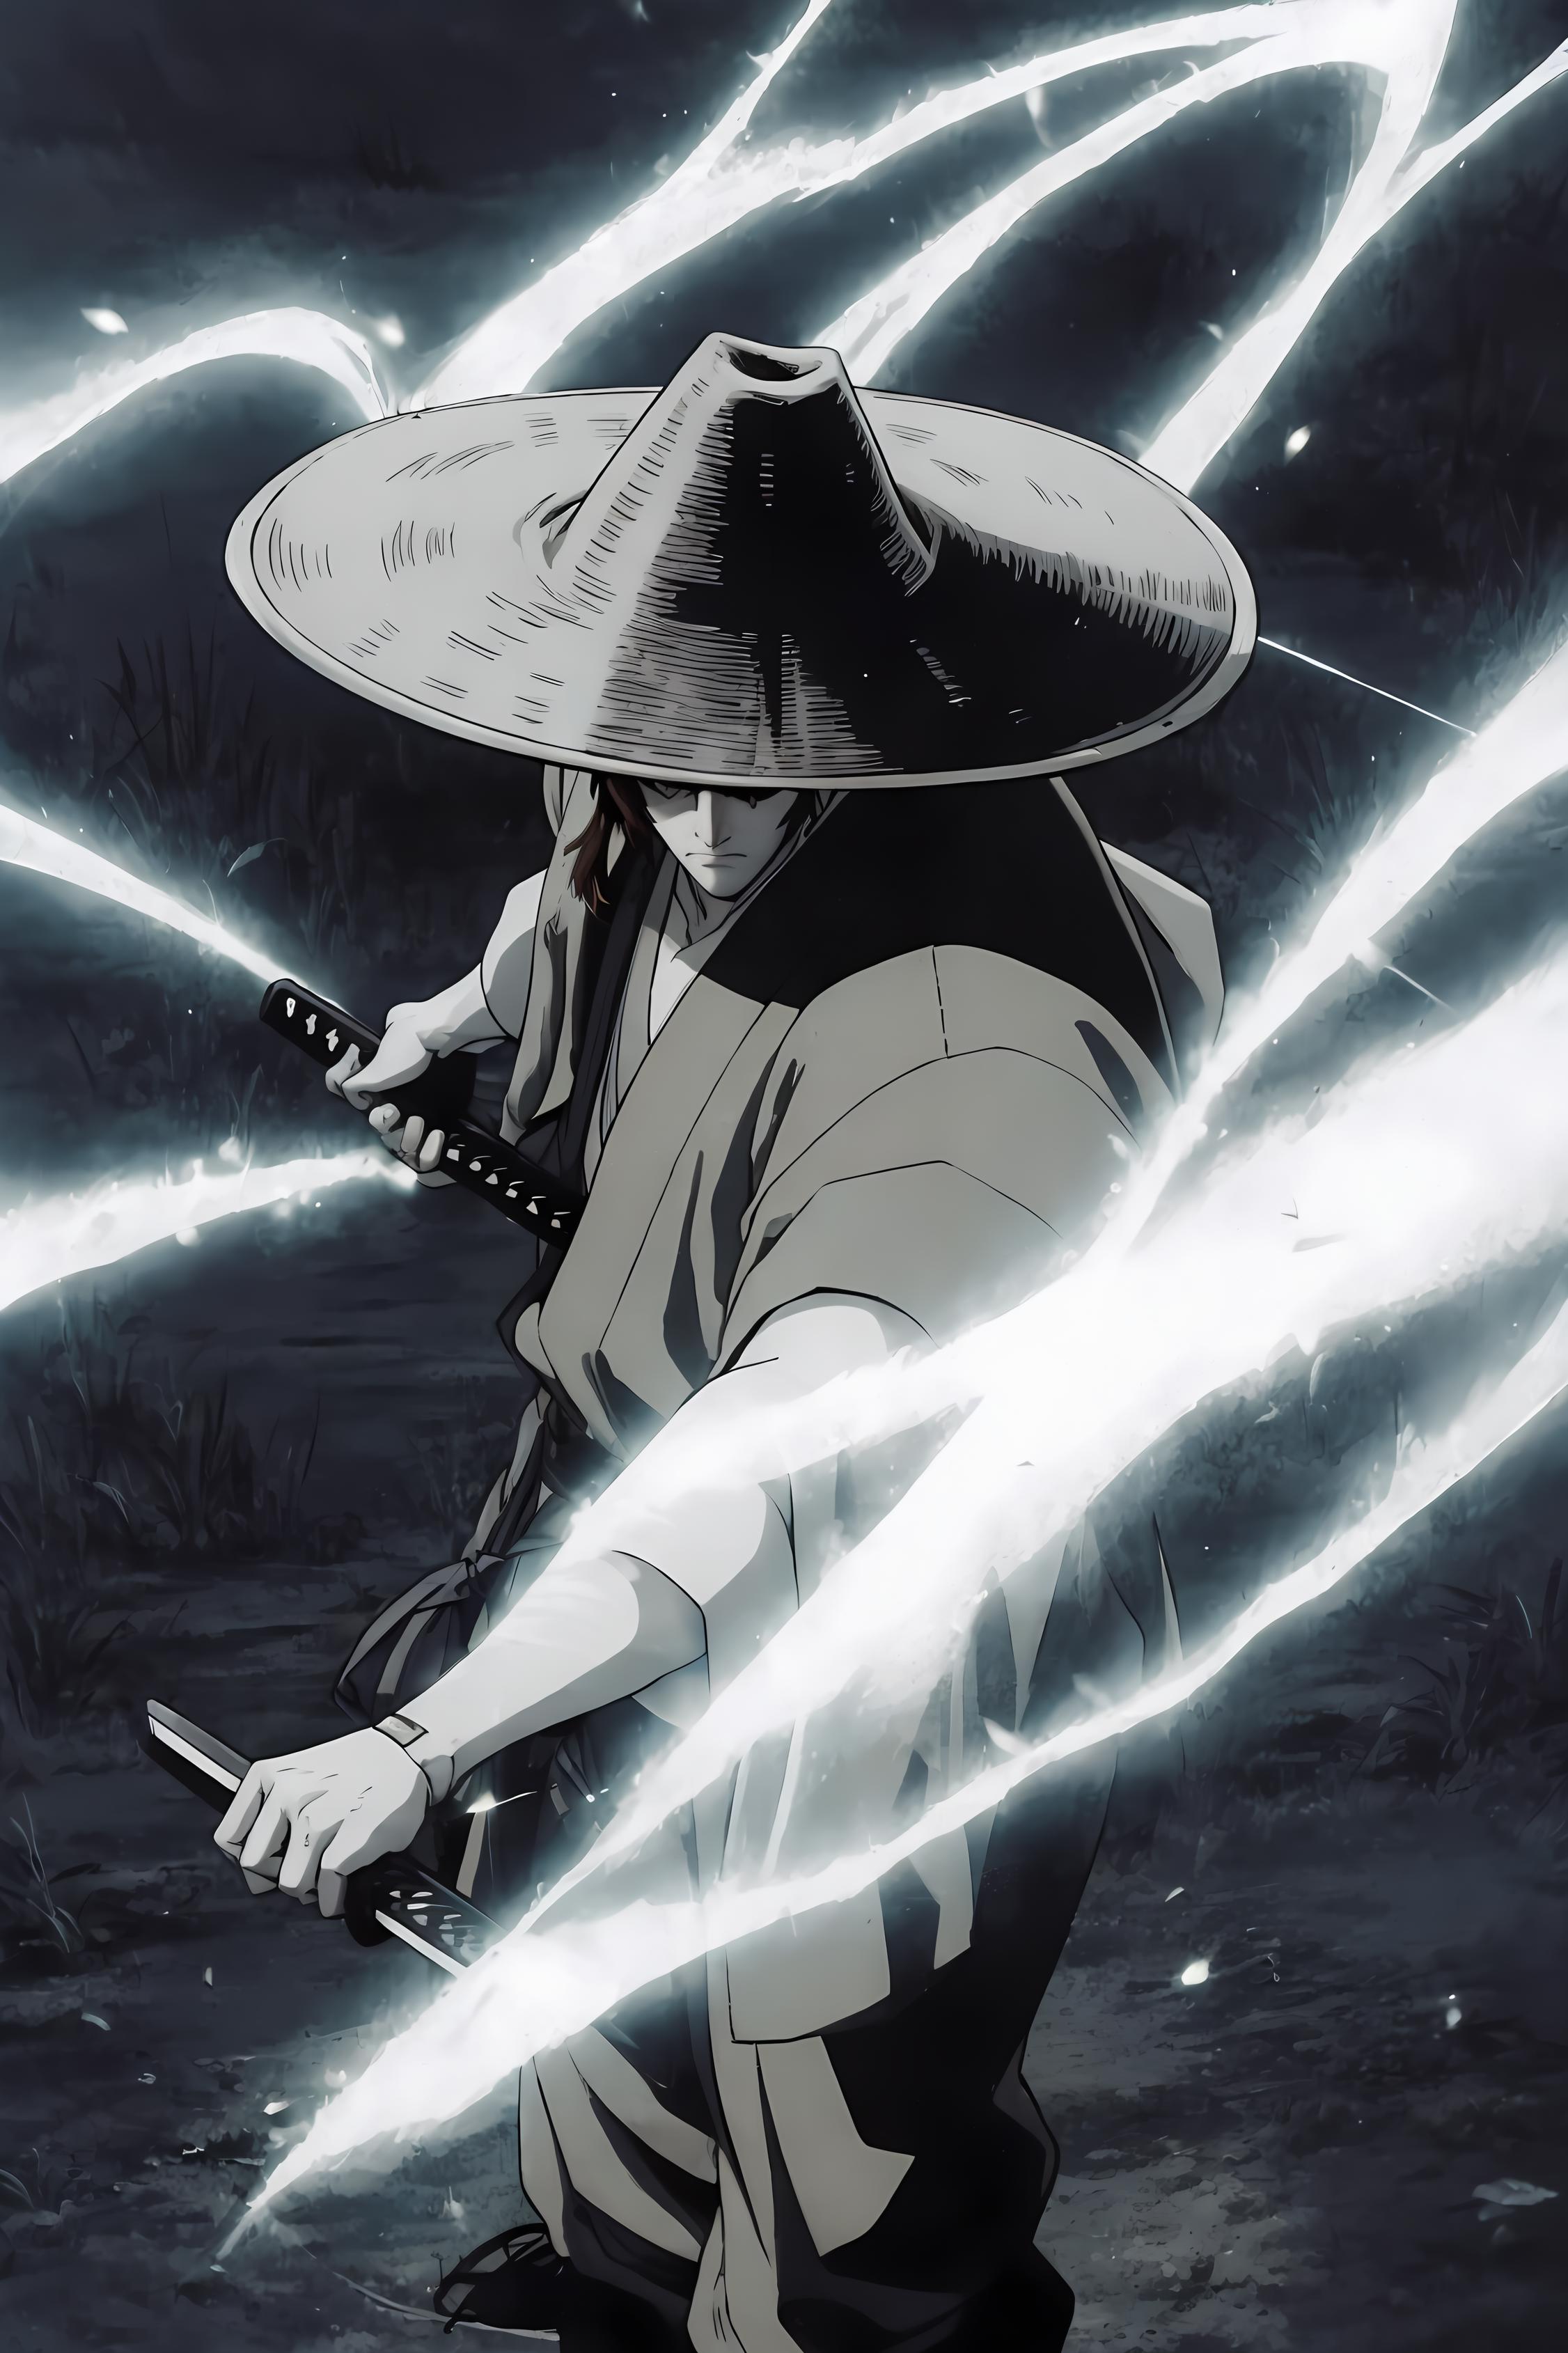 Ninja Scroll image by RIXYN